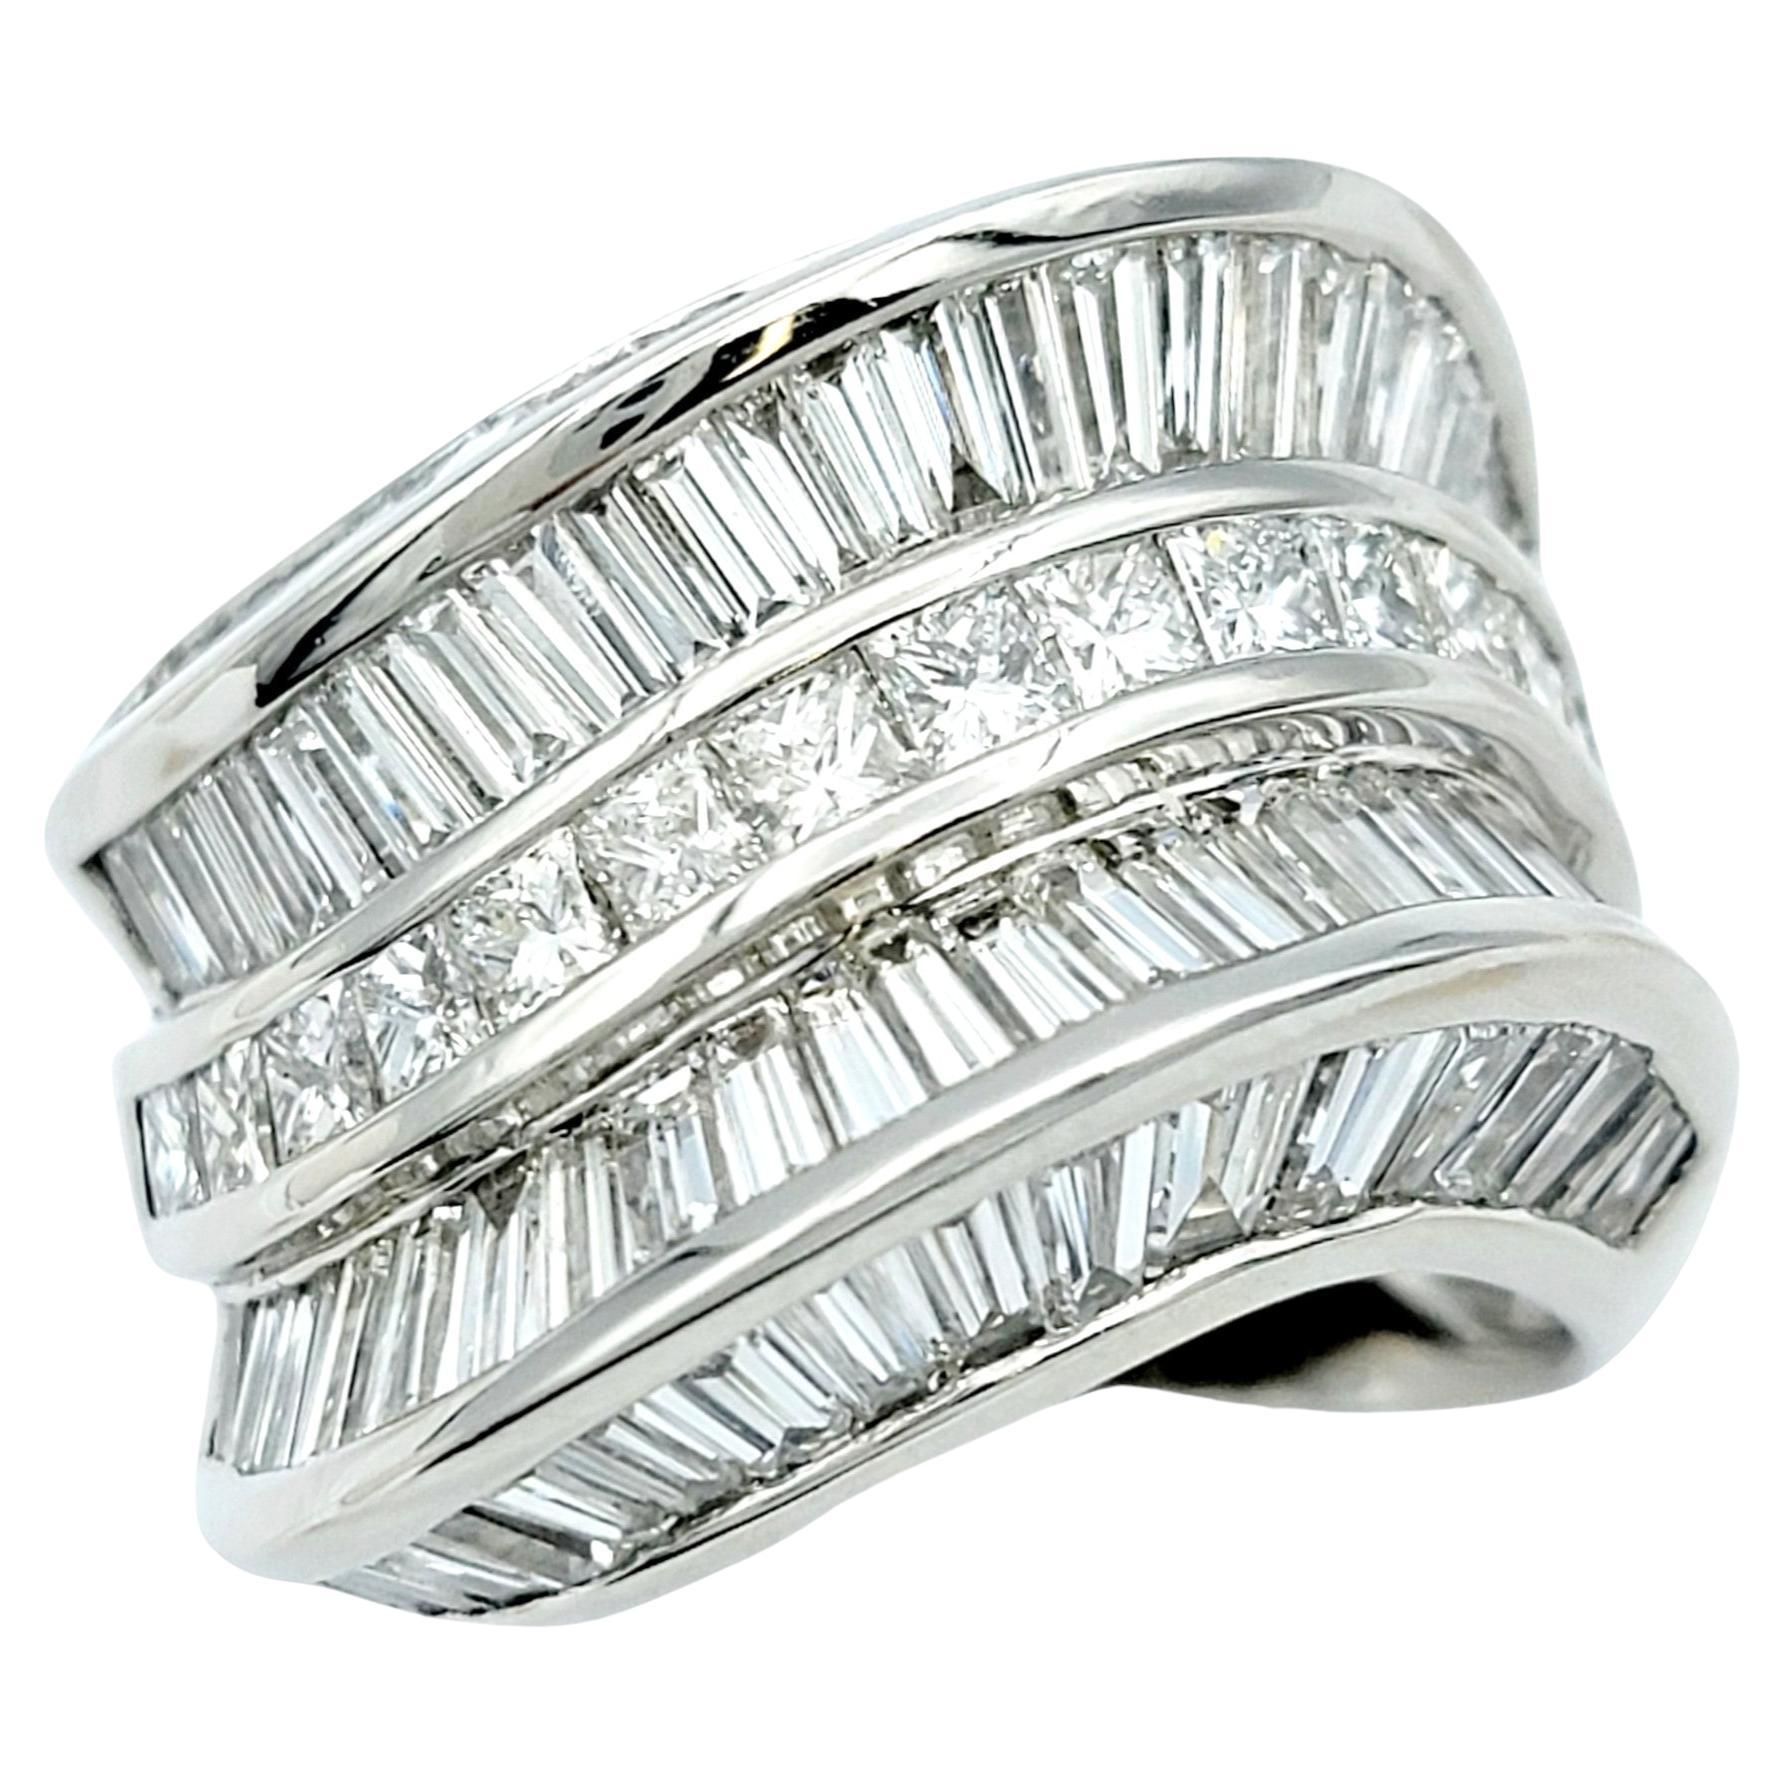 6.19 Carat Baguette & Princess Cut Diamond Wide Wave Style Band Ring in Platinum